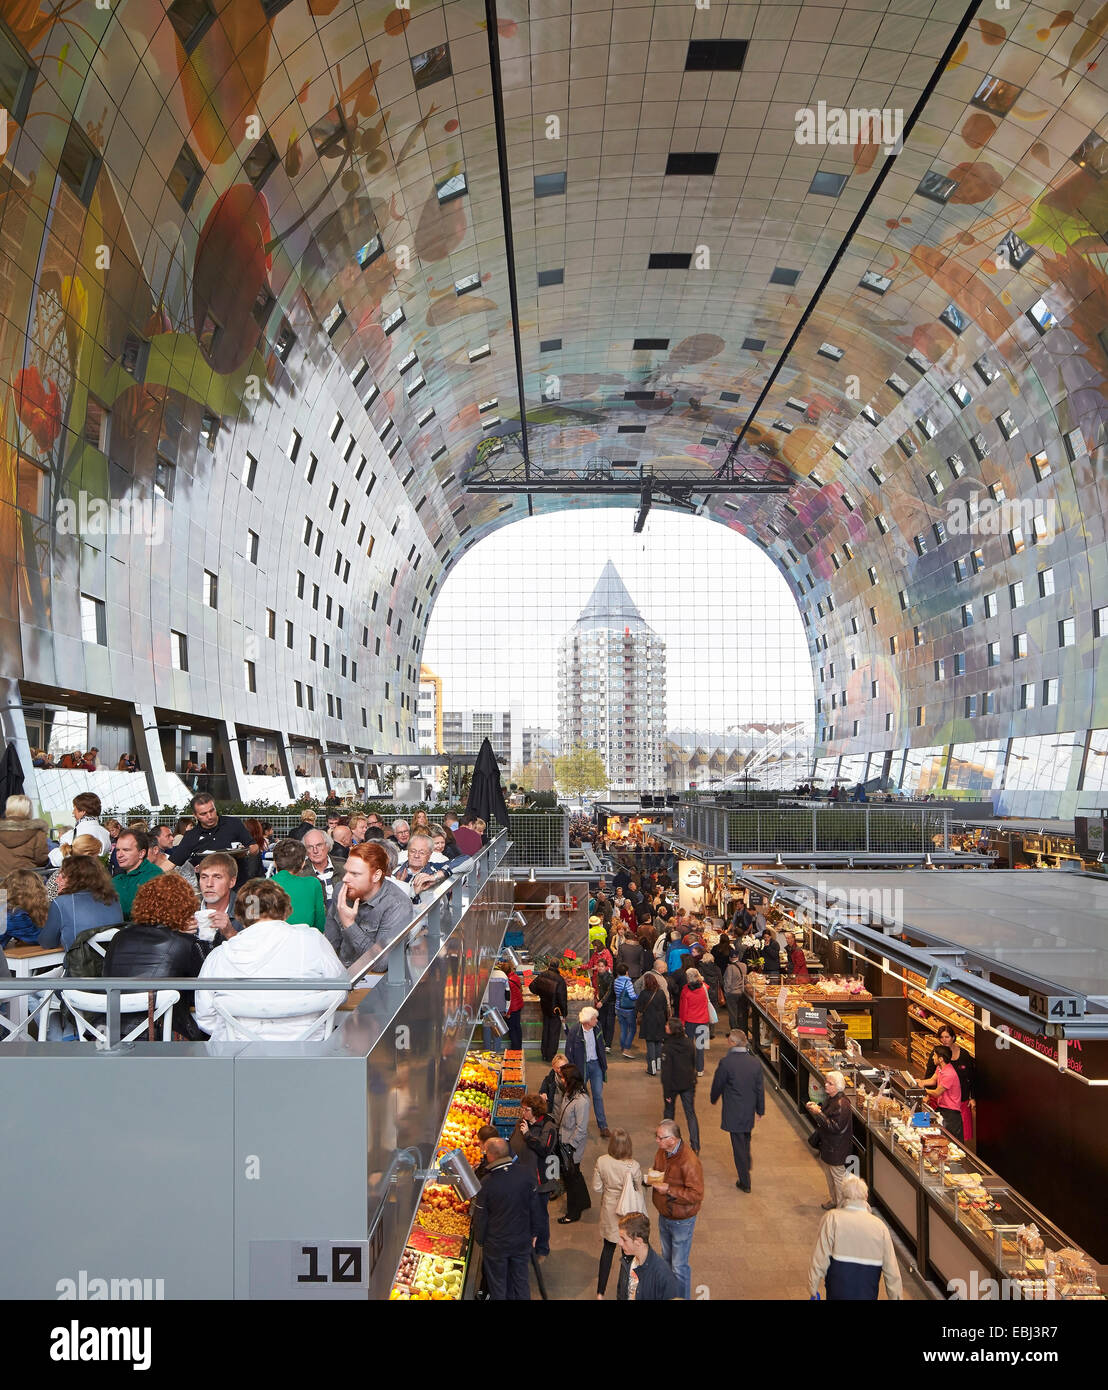 Market Hall Rotterdam, Rotterdam, Netherlands. Architect: MVRDV, 2014. View through market hall with restaurants and food stalls Stock Photo